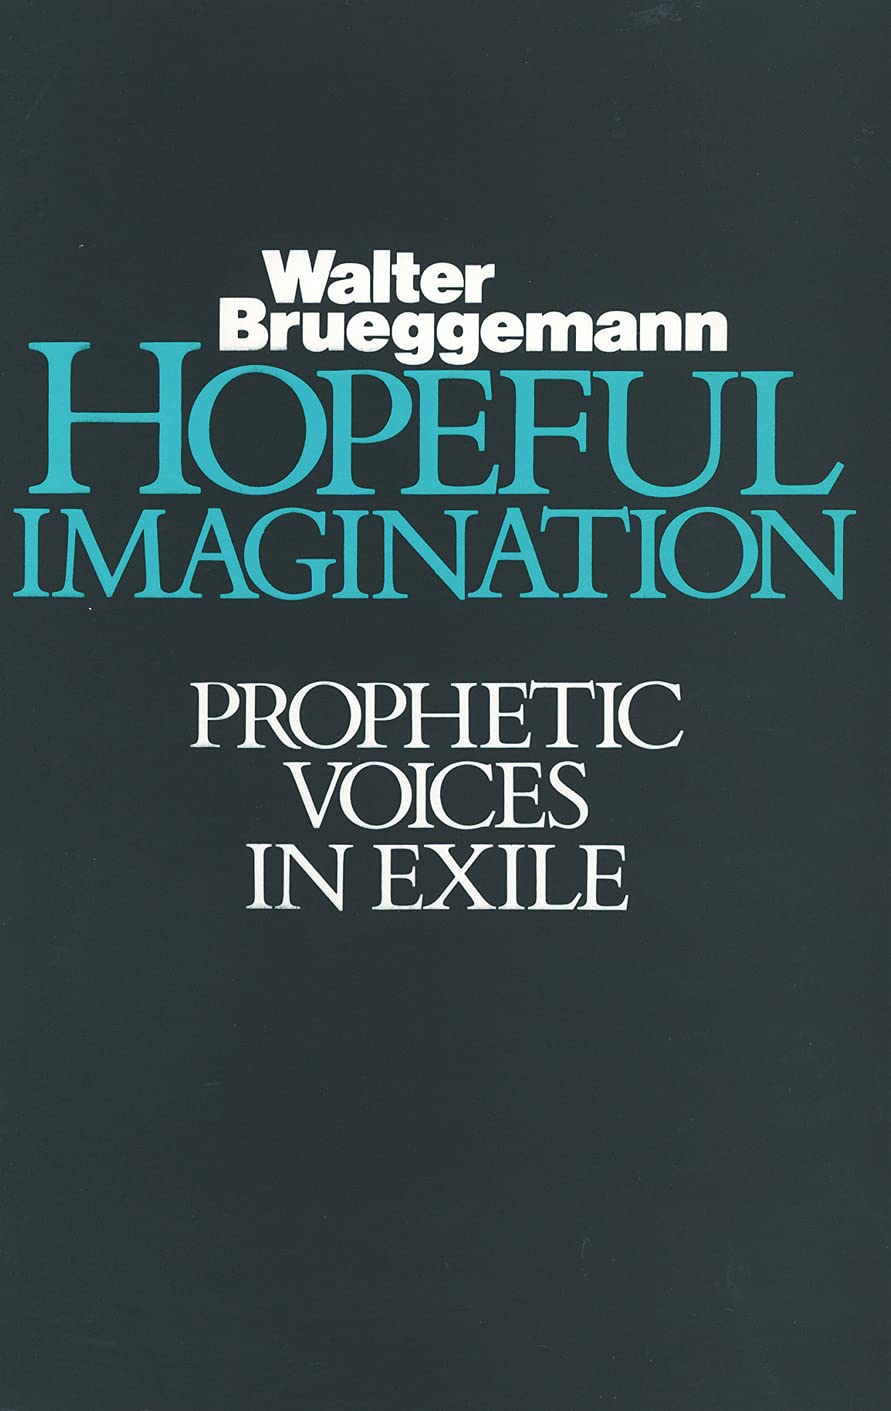 Hopeful Imagination by Walter Brueggemann